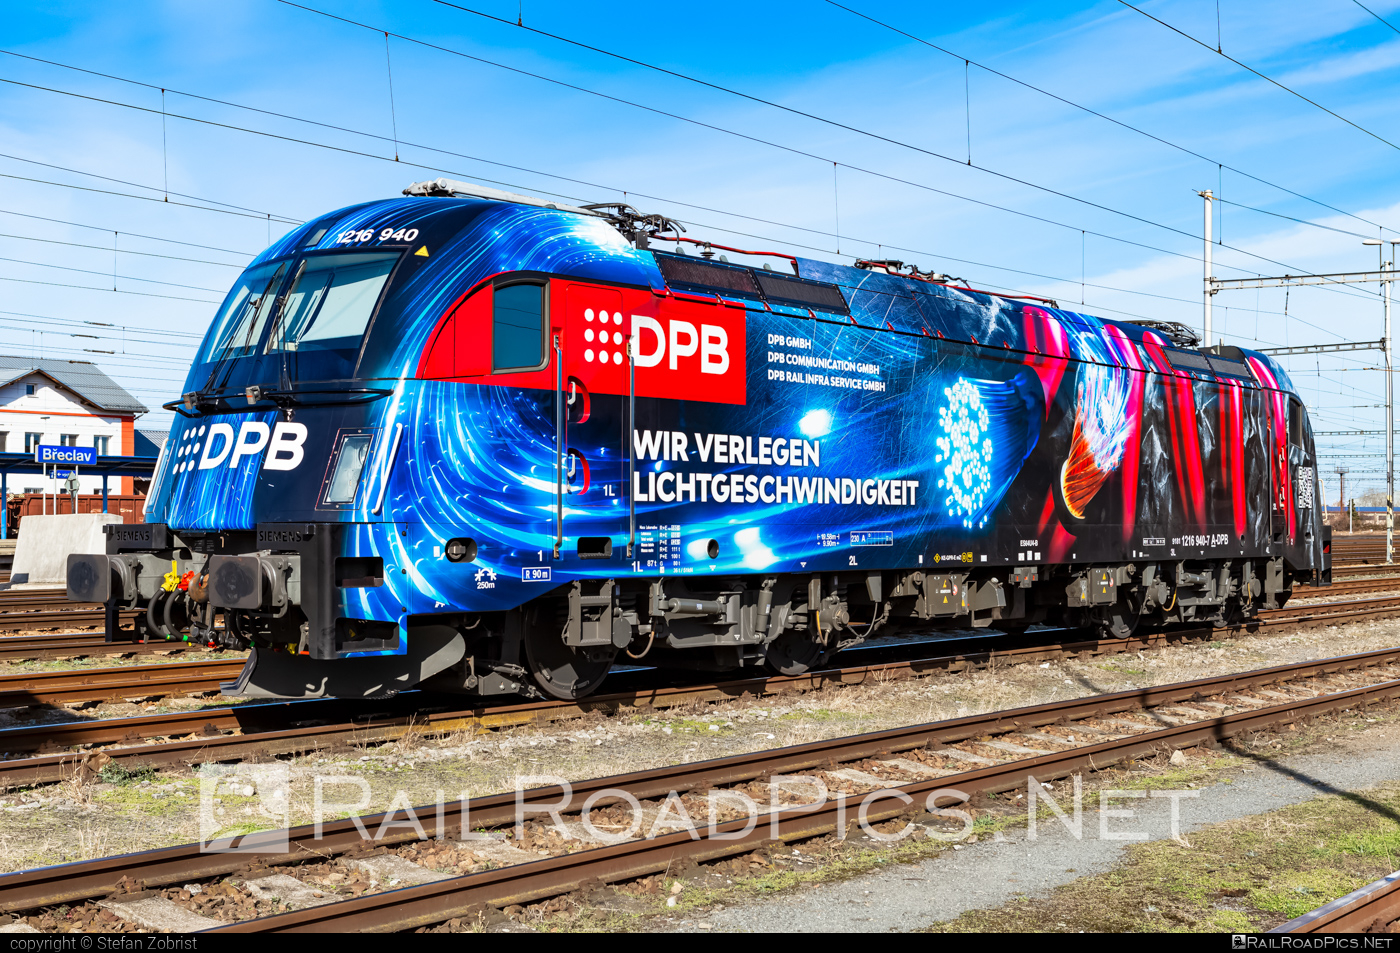 Siemens ES 64 U4 - 1216 940 operated by DPB Rail Infra Service GmbH #dpb #dpbRailInfraService #dpbRailInfraServiceGmbh #es64 #es64u4 #eurosprinter #siemens #siemensEs64 #siemensEs64u4 #siemenstaurus #taurus #tauruslocomotive